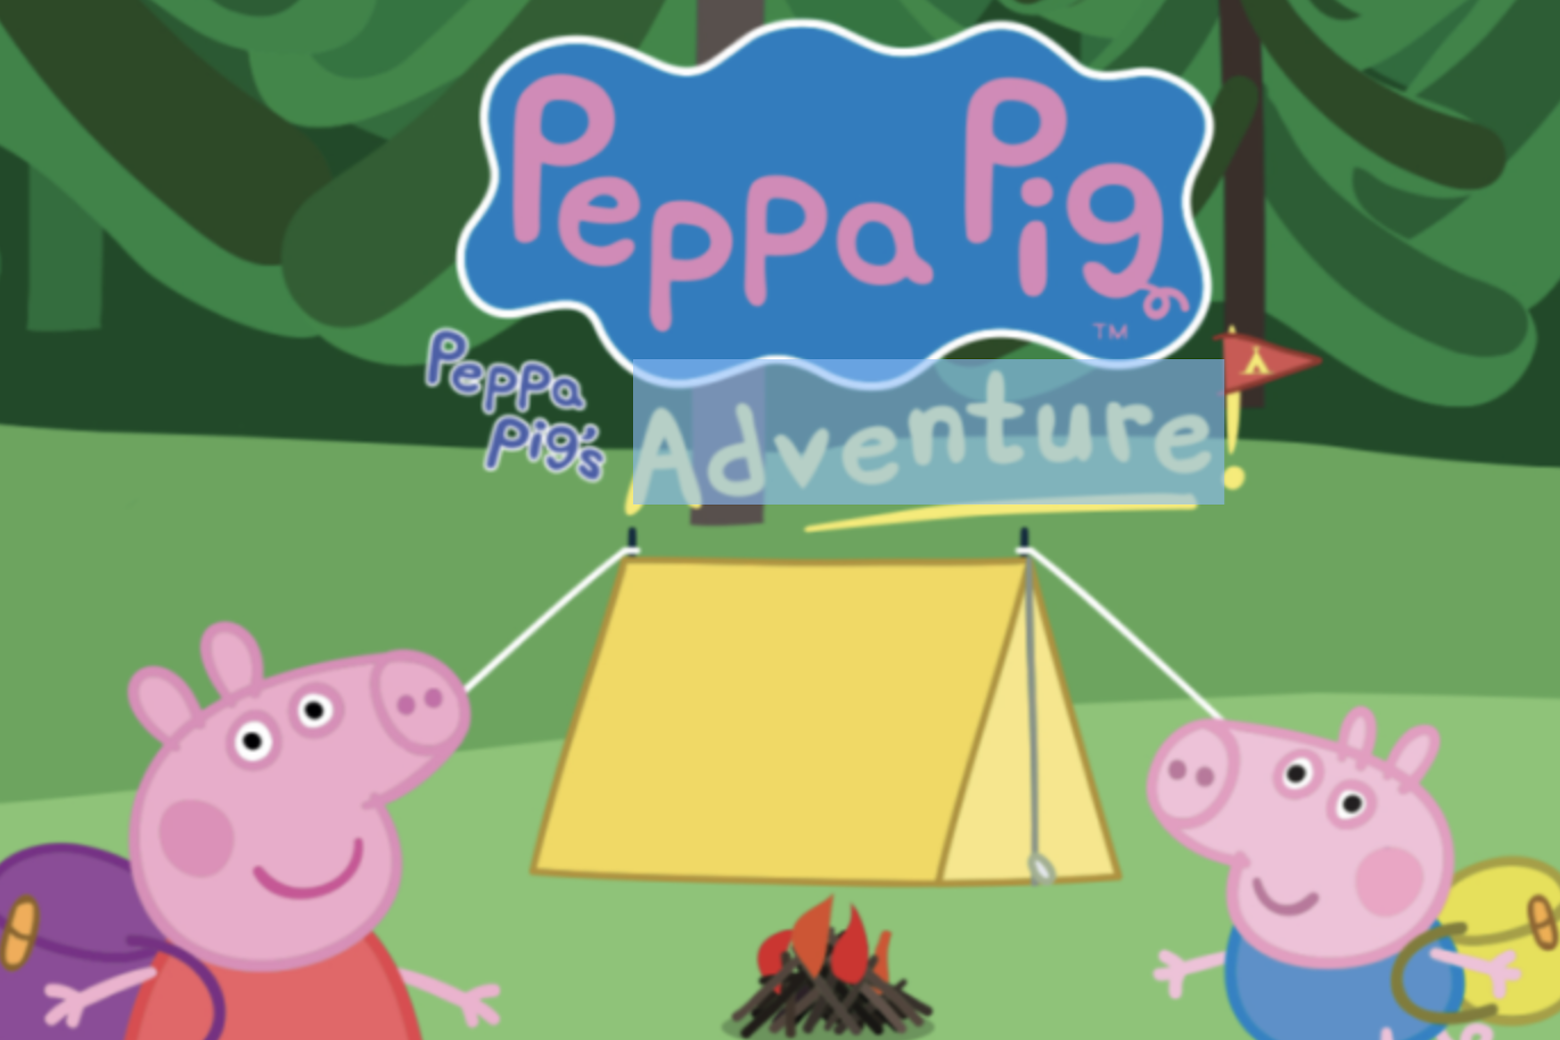 Peppa Pig's latest adventure begins as Peppa Pig: World Adventures